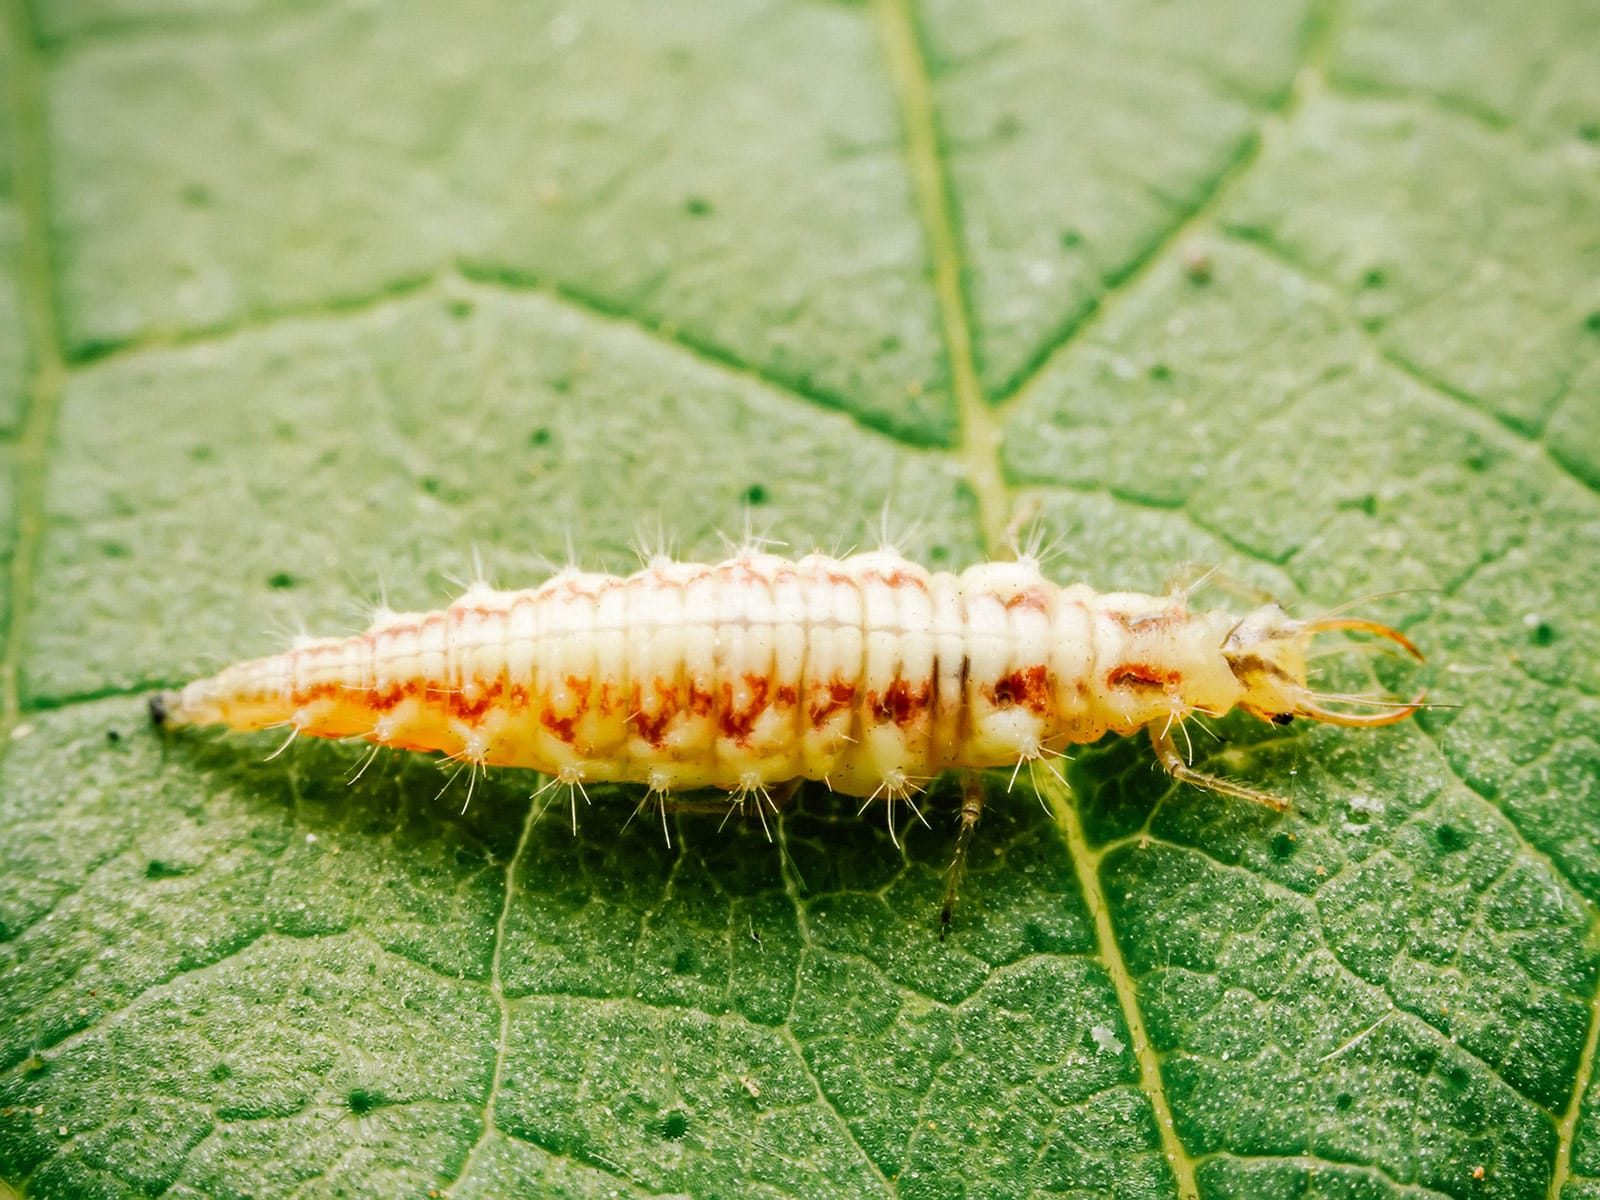 Lacewing larva on a leaf